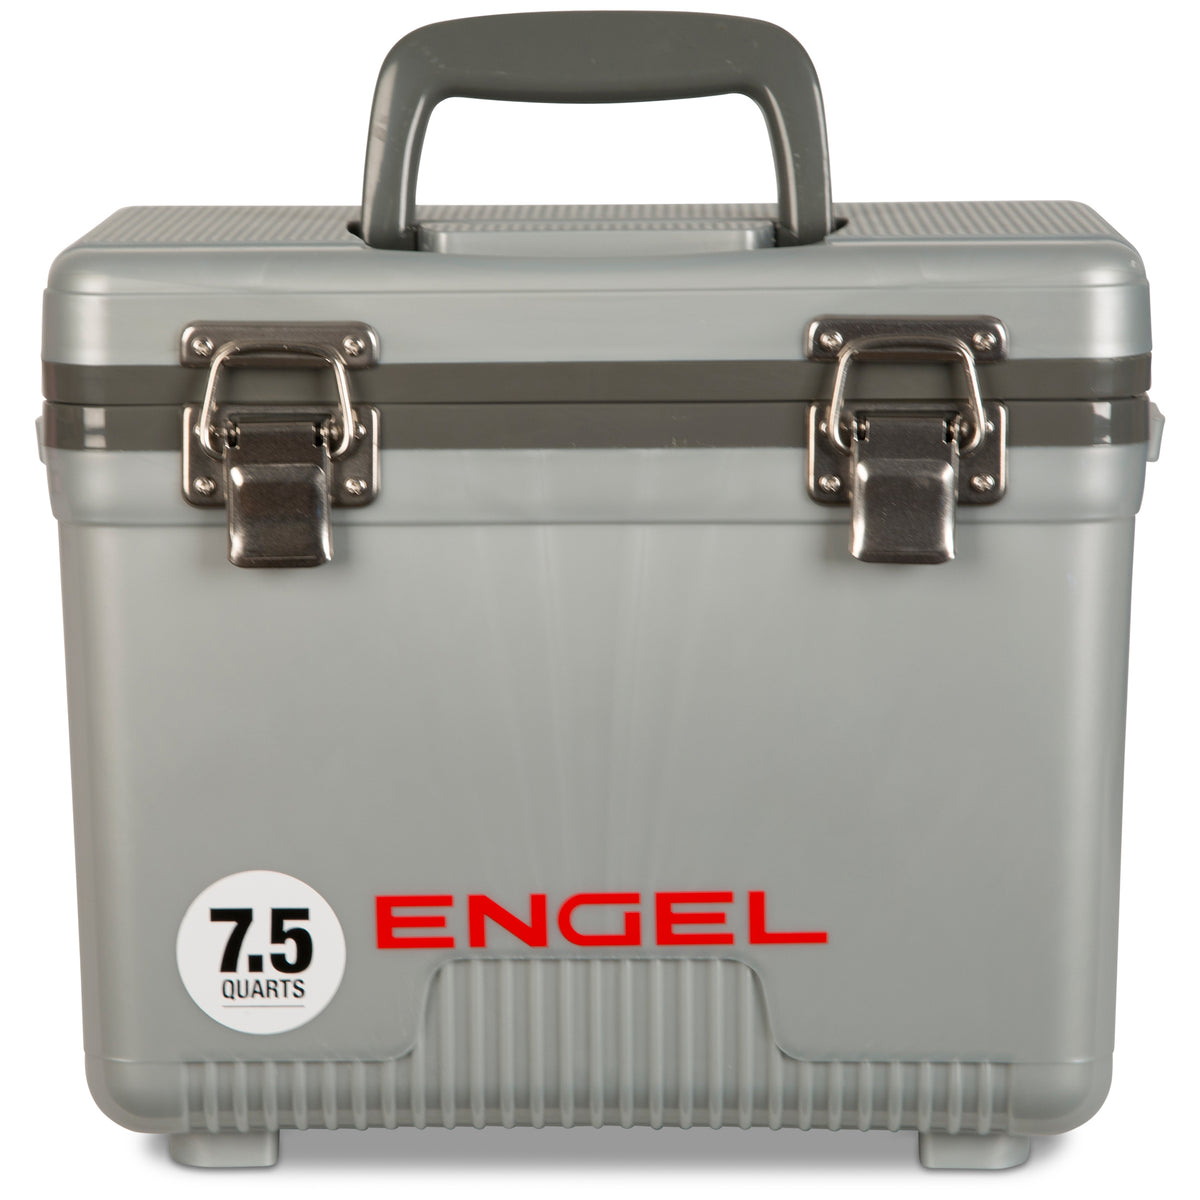 Engel 7.5 Quart Drybox/Cooler - Silver